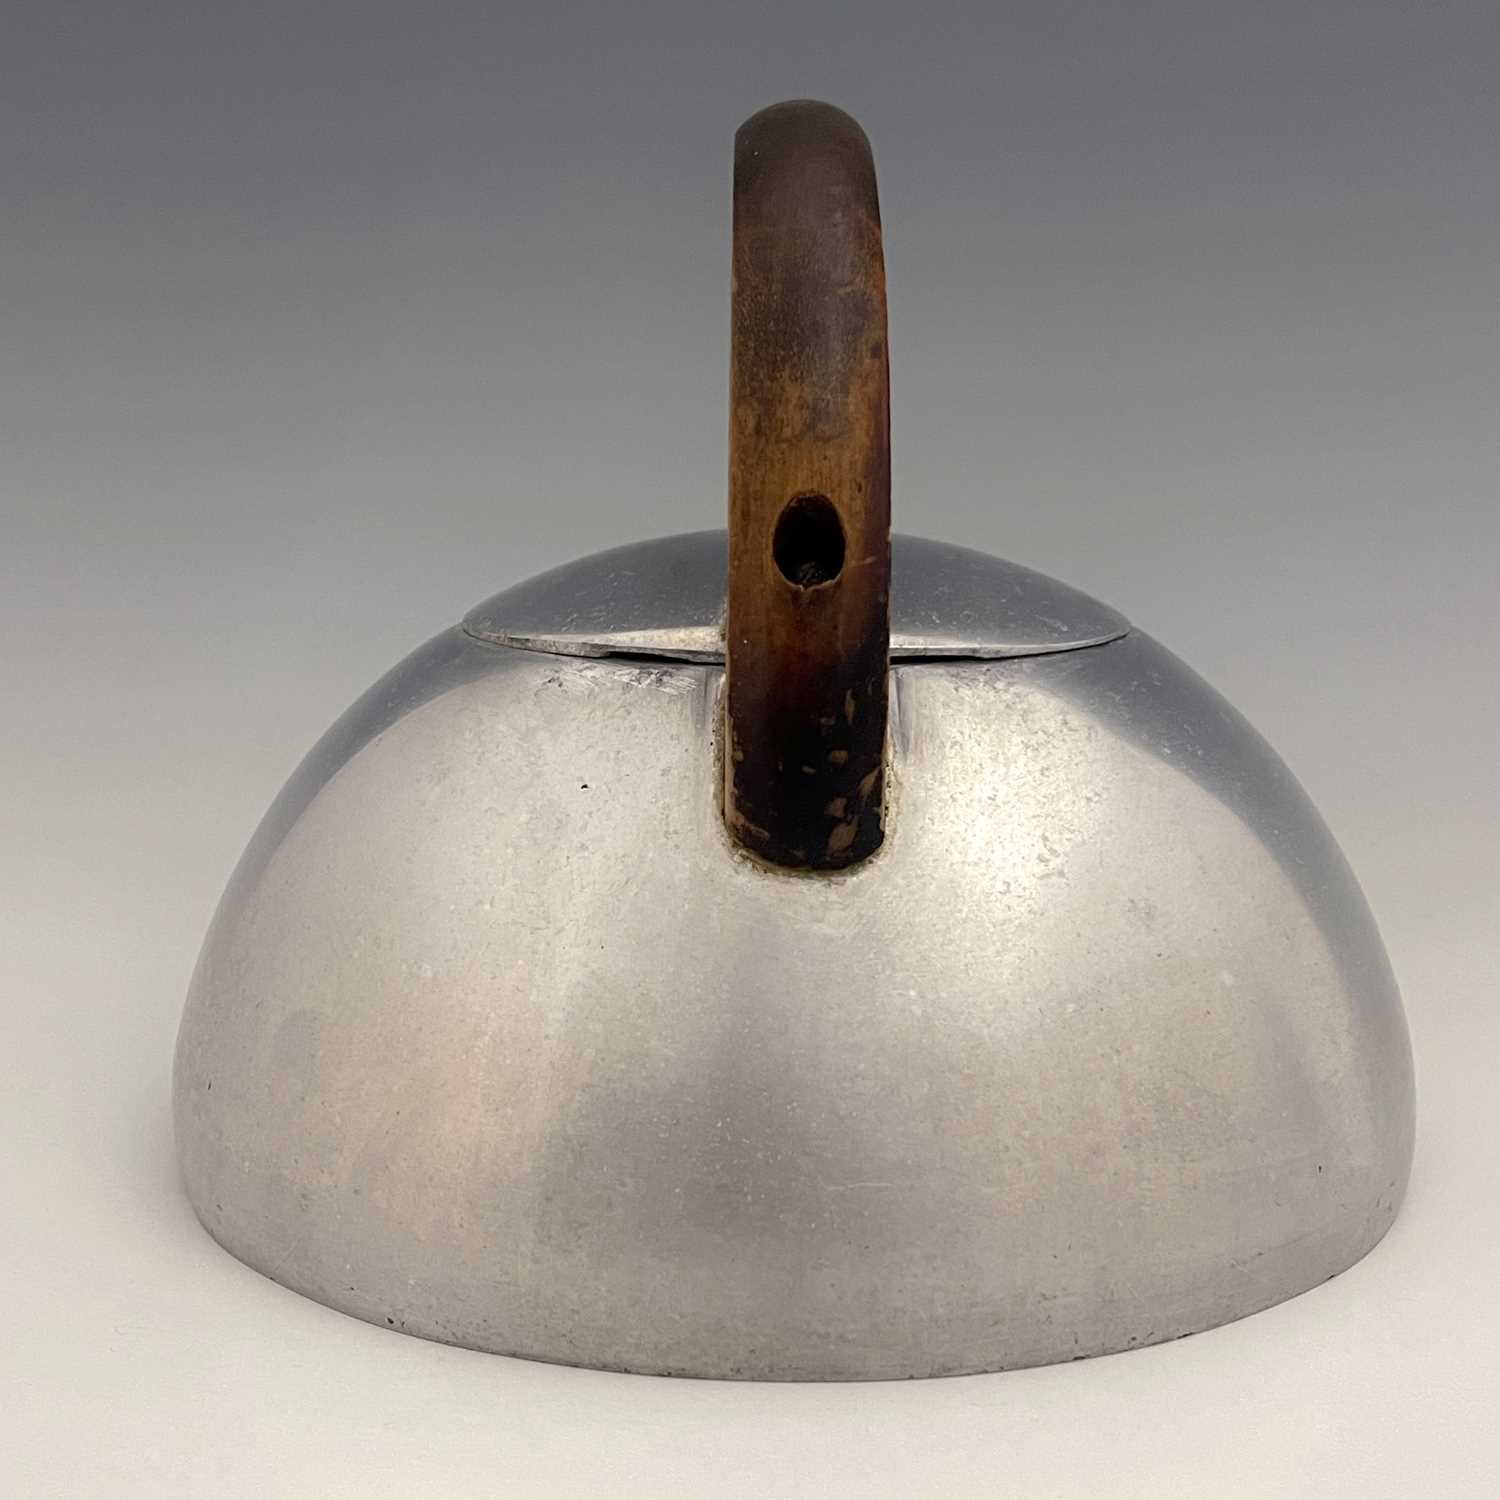 Jean Picquot after John Gordon Rideout, a Picquot Ware aluminium alloy K3 kettle, designed 1938, - Image 8 of 8